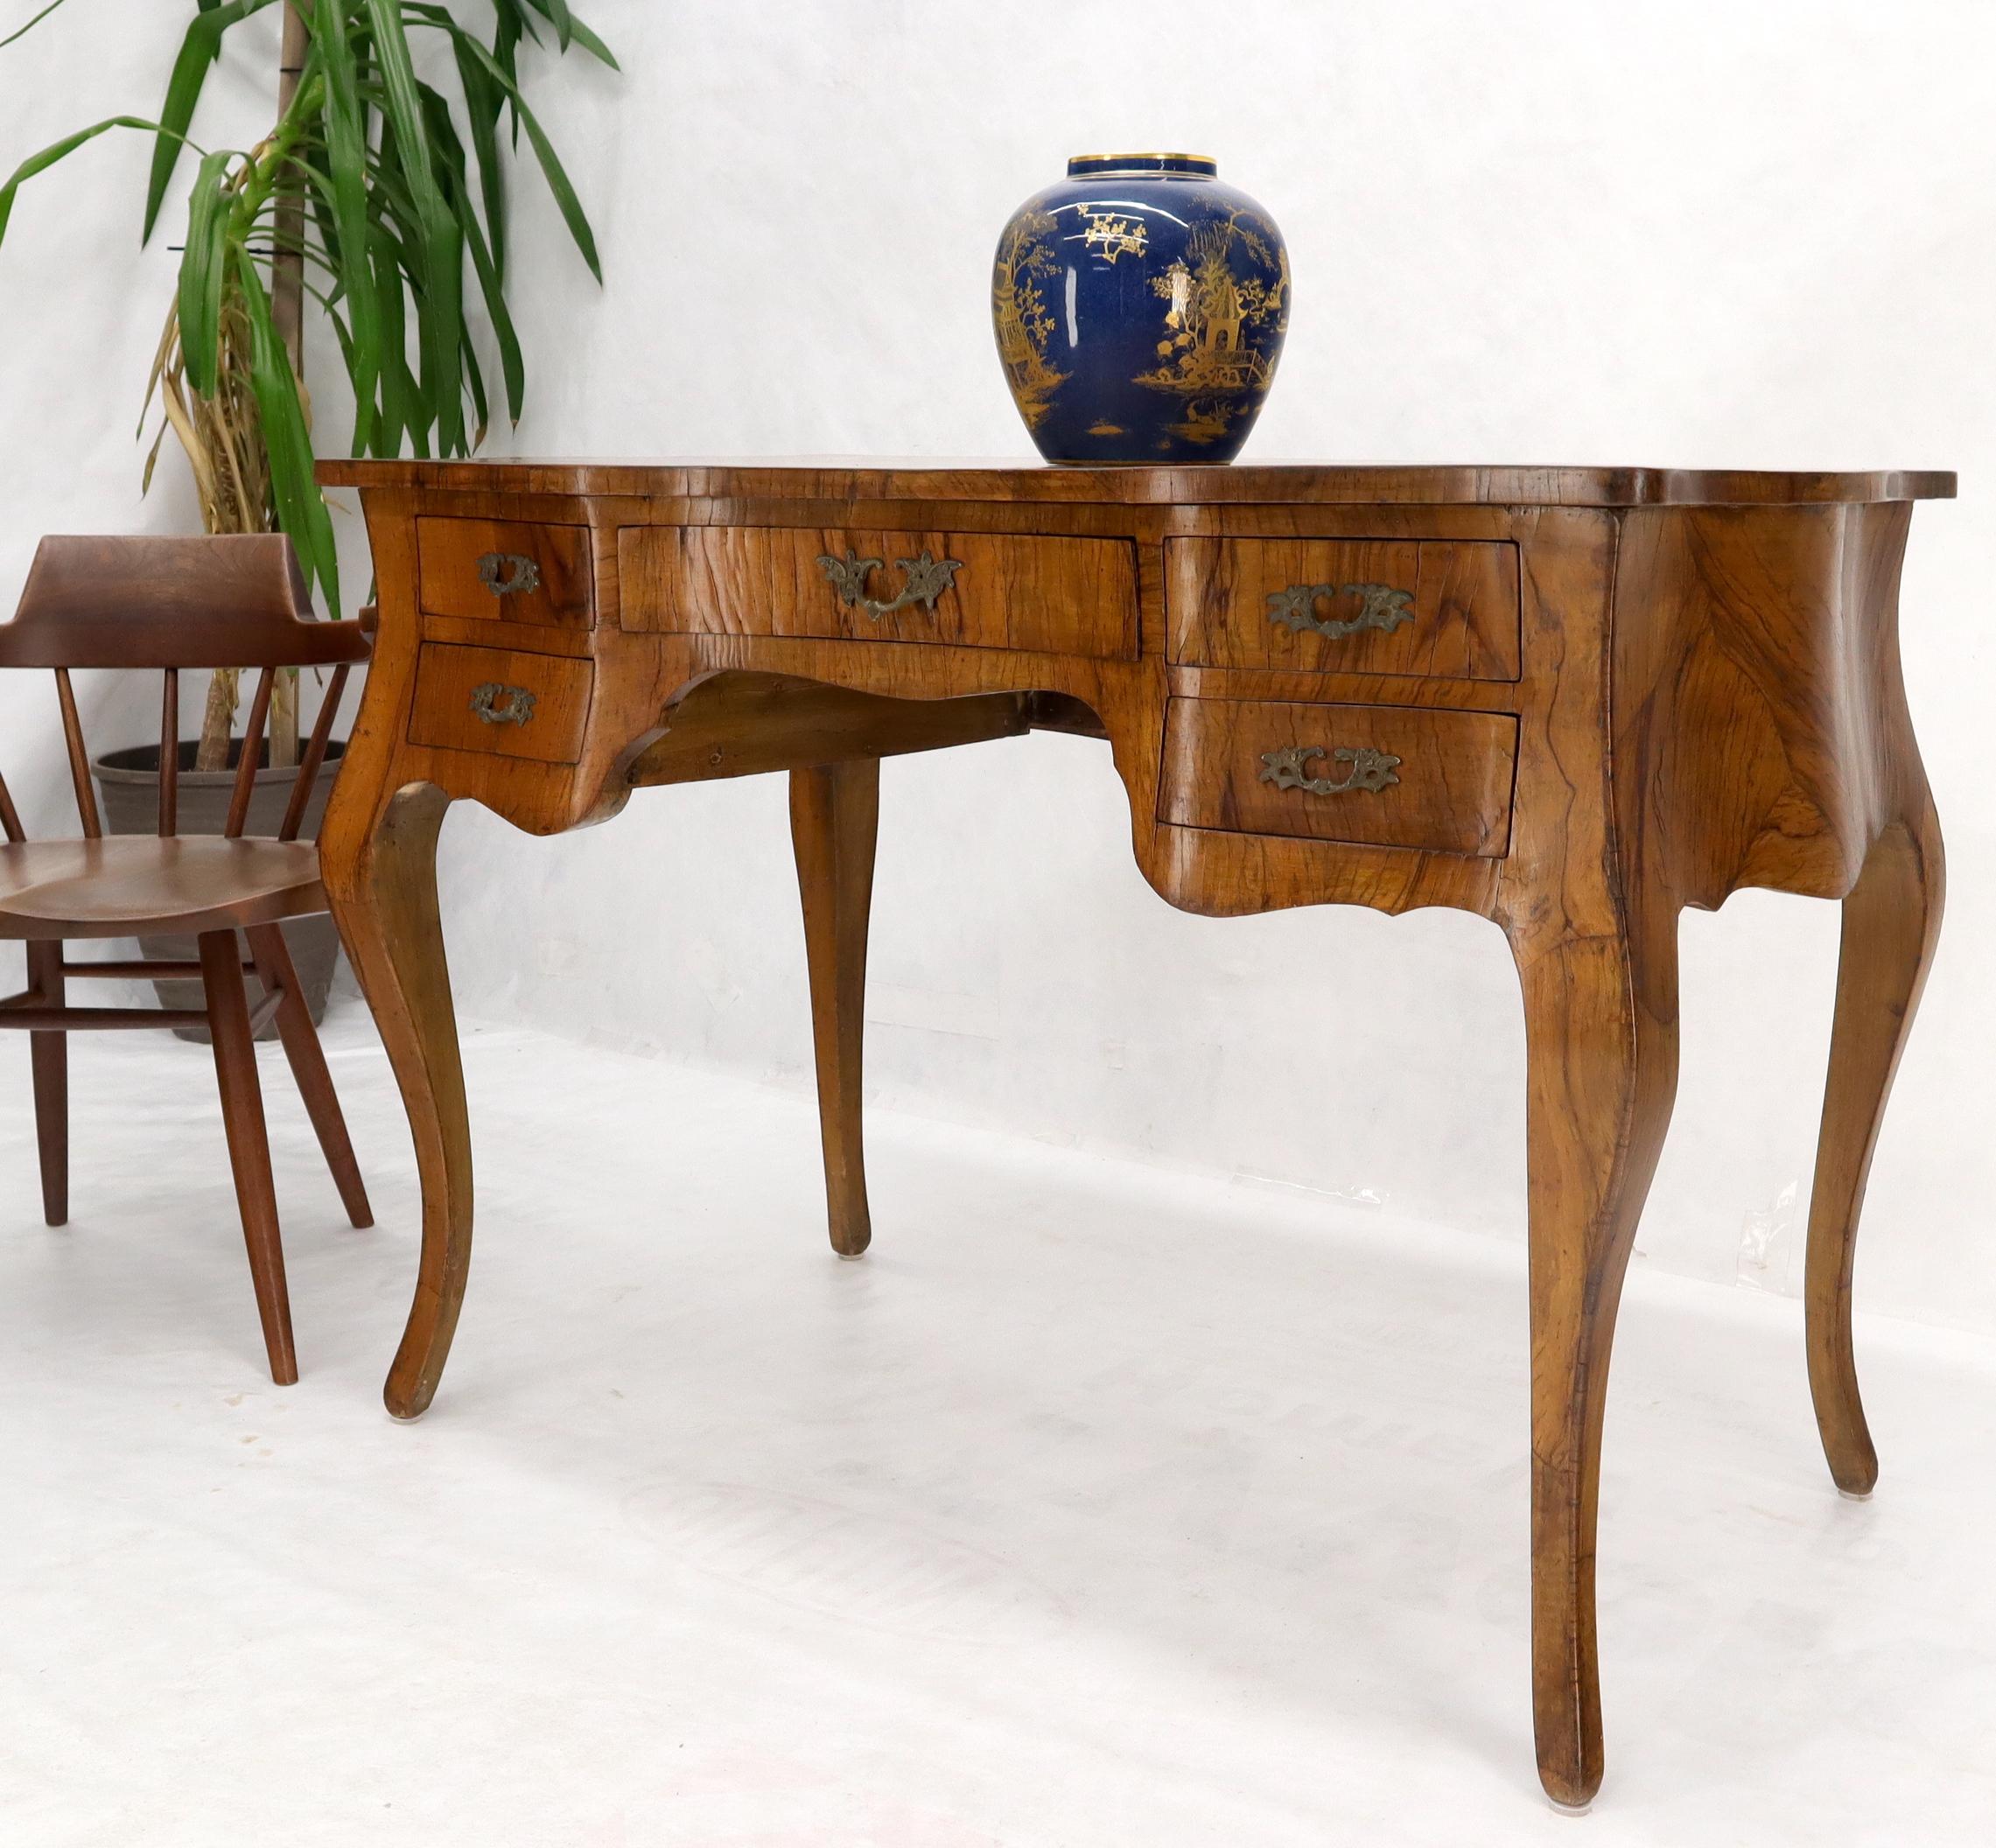 20th Century Olive Burl Wood Heavy Patches Veneer Italian Bombay Shape Desk Writing Table